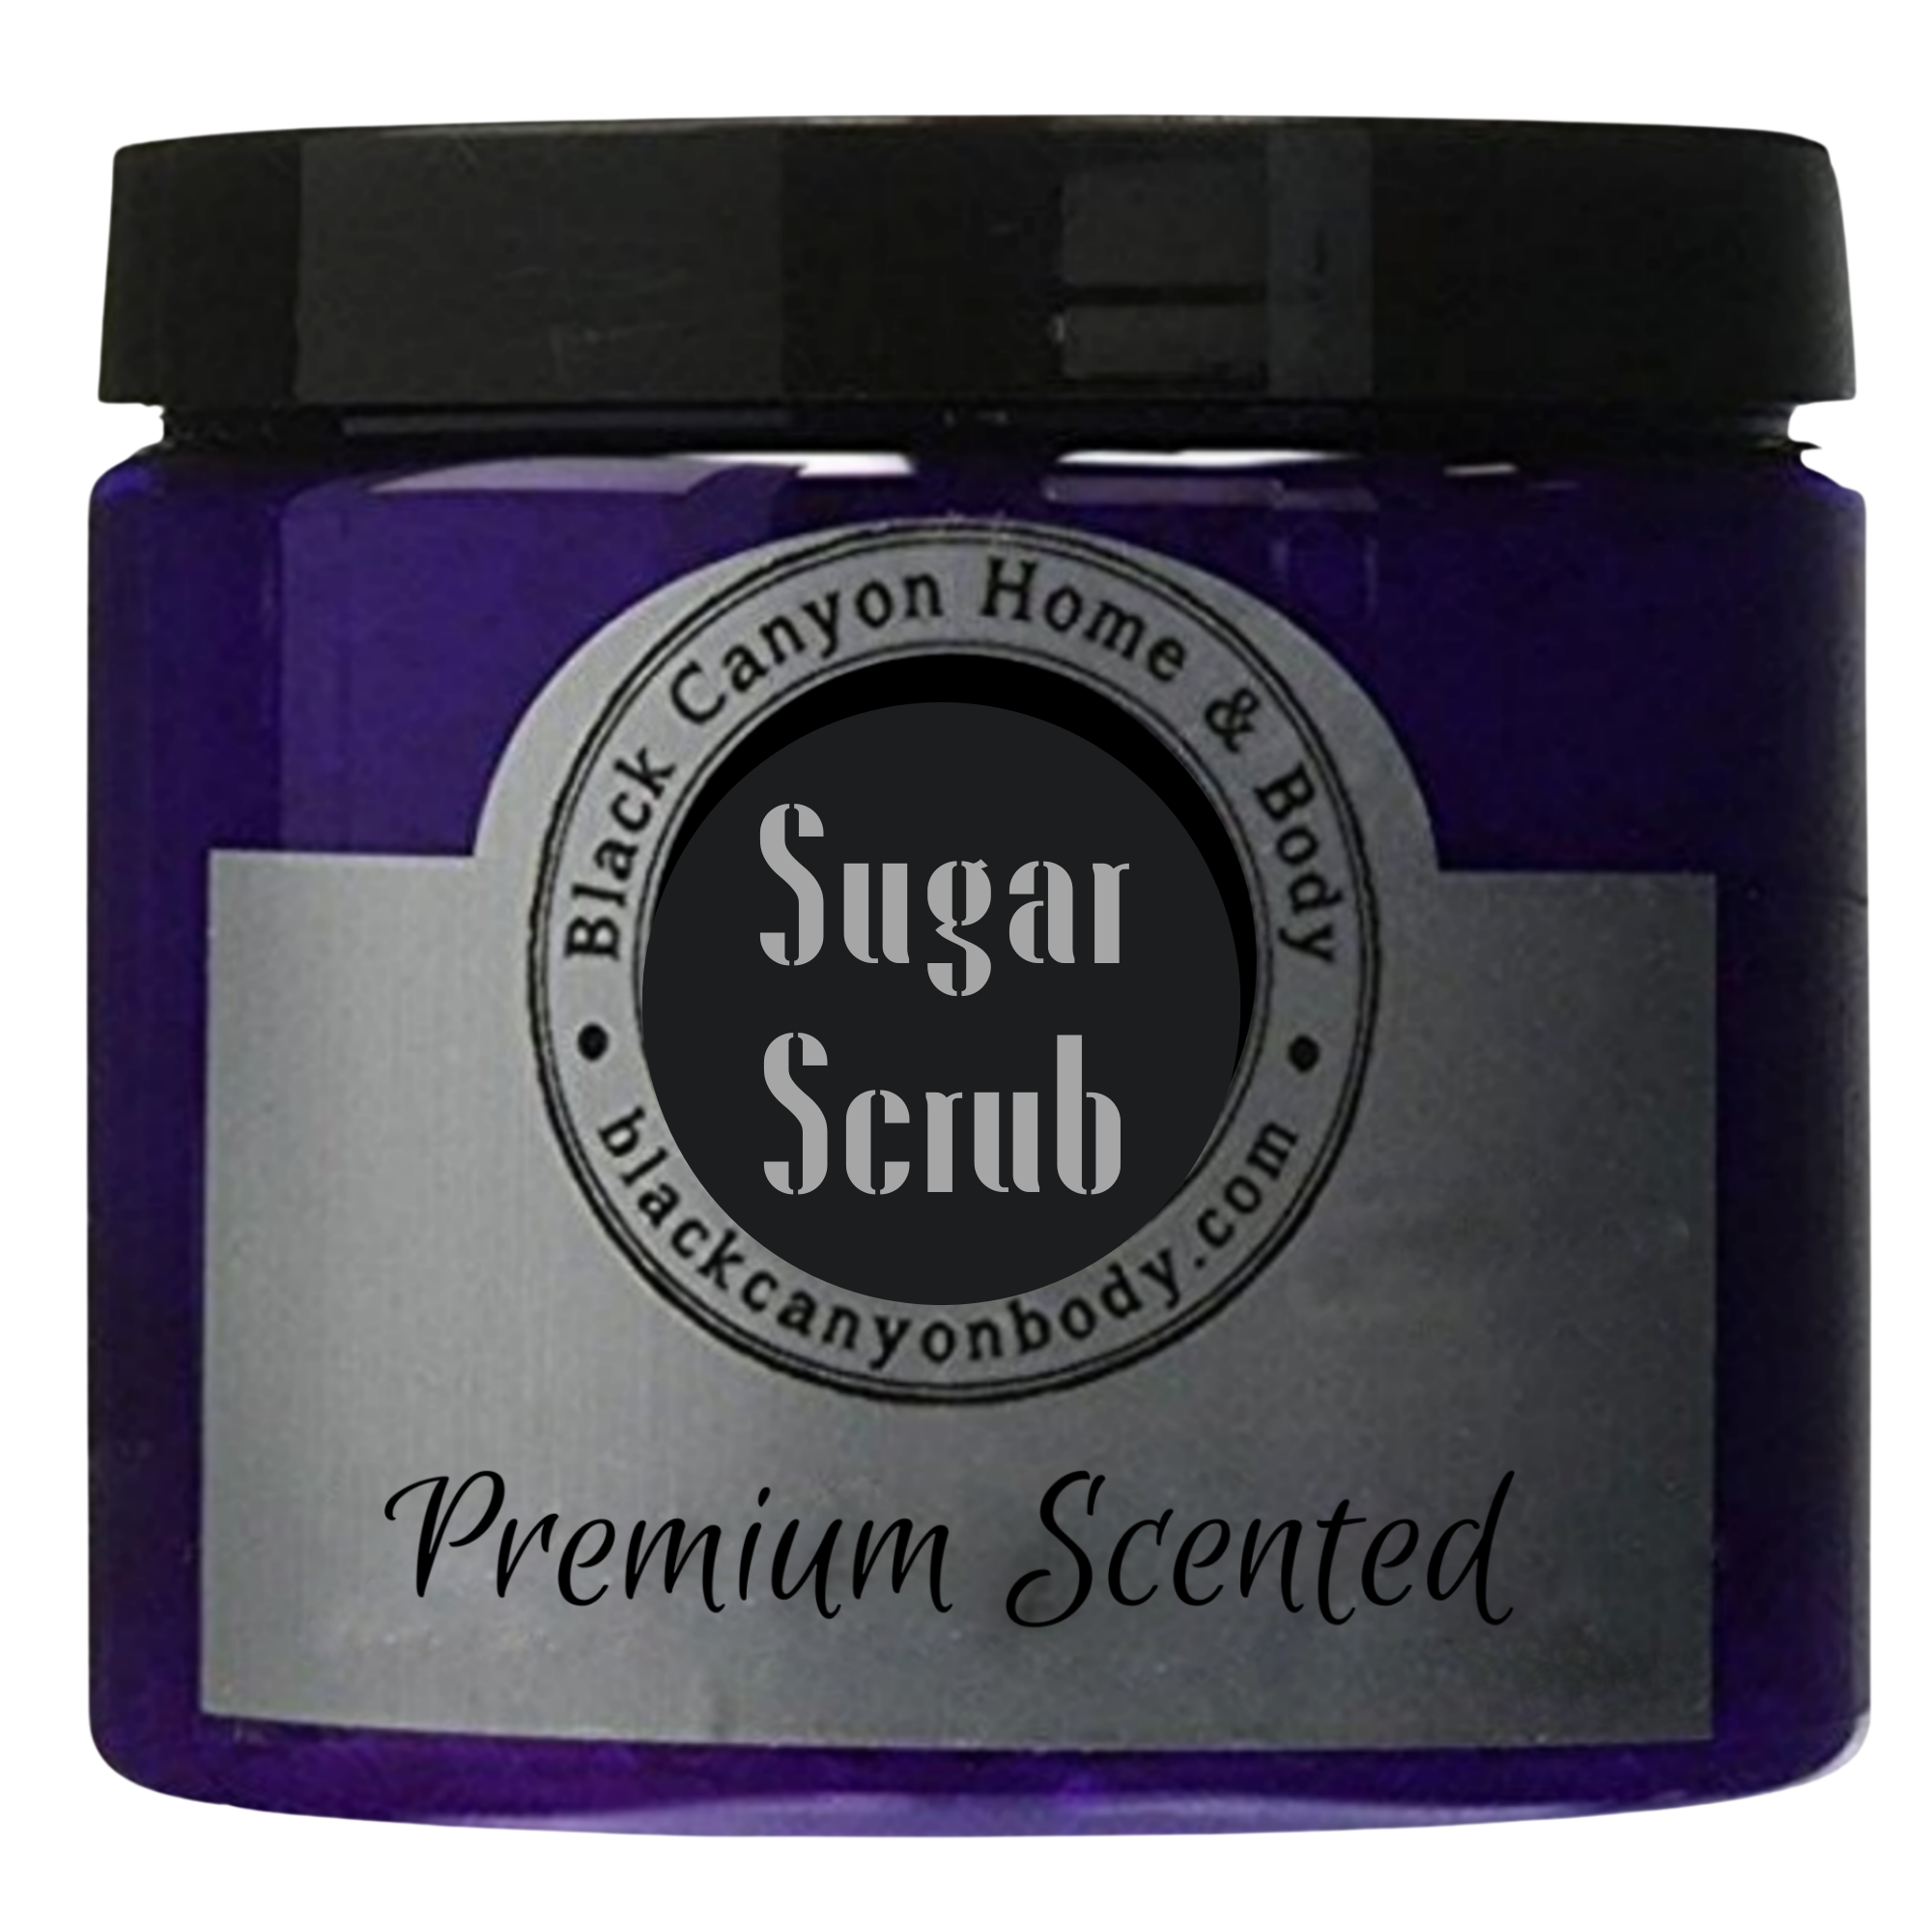 Black Canyon Bergamot Mint Scented Sugar Scrub